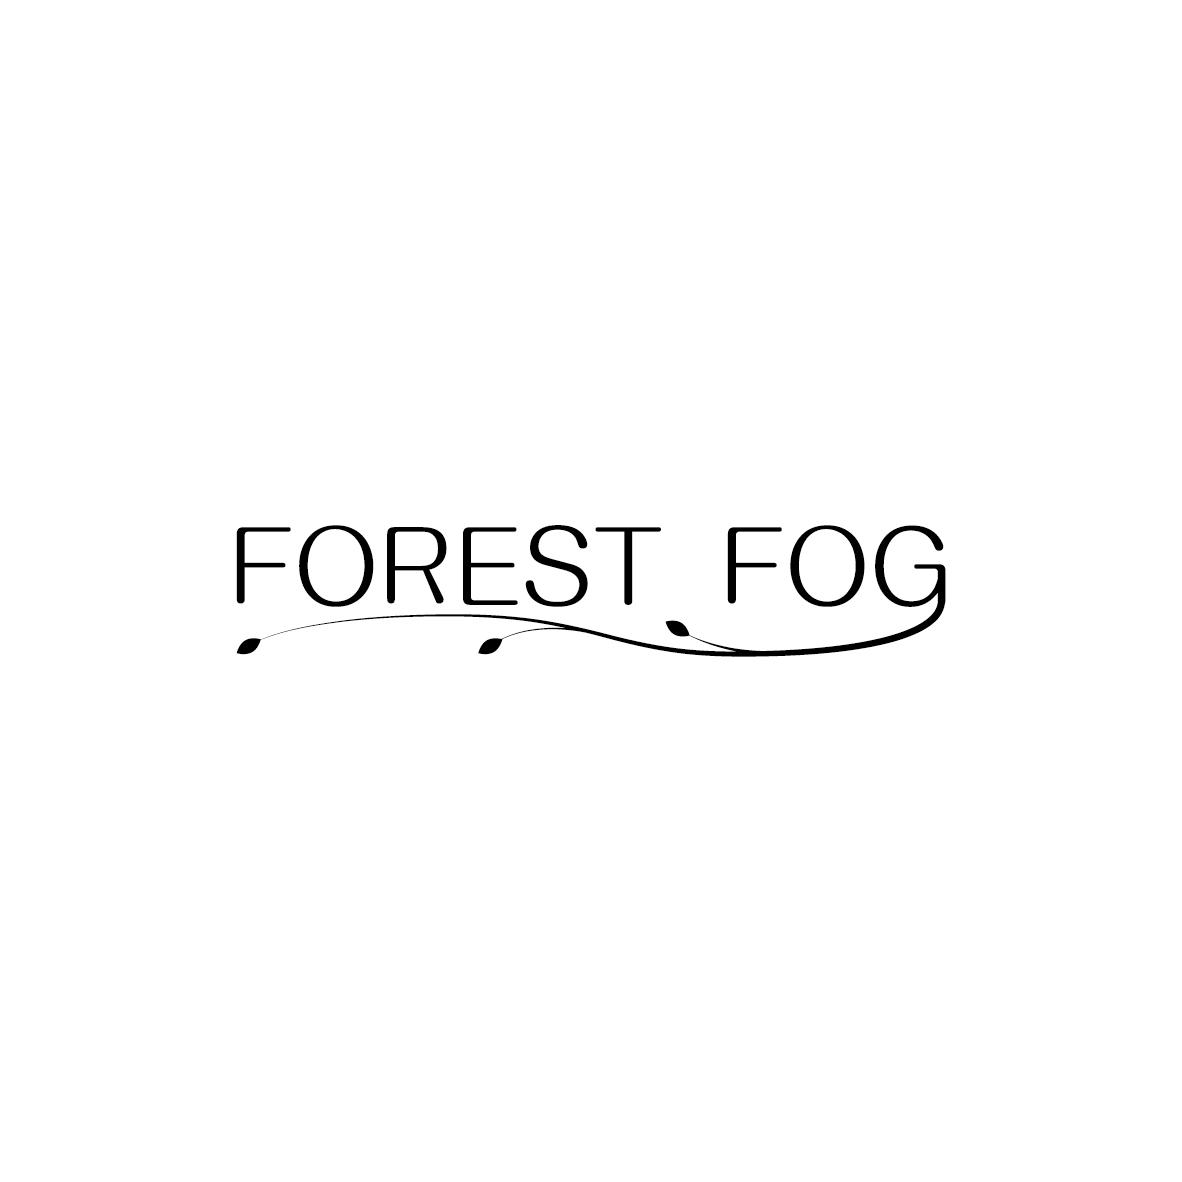 FOREST FOG